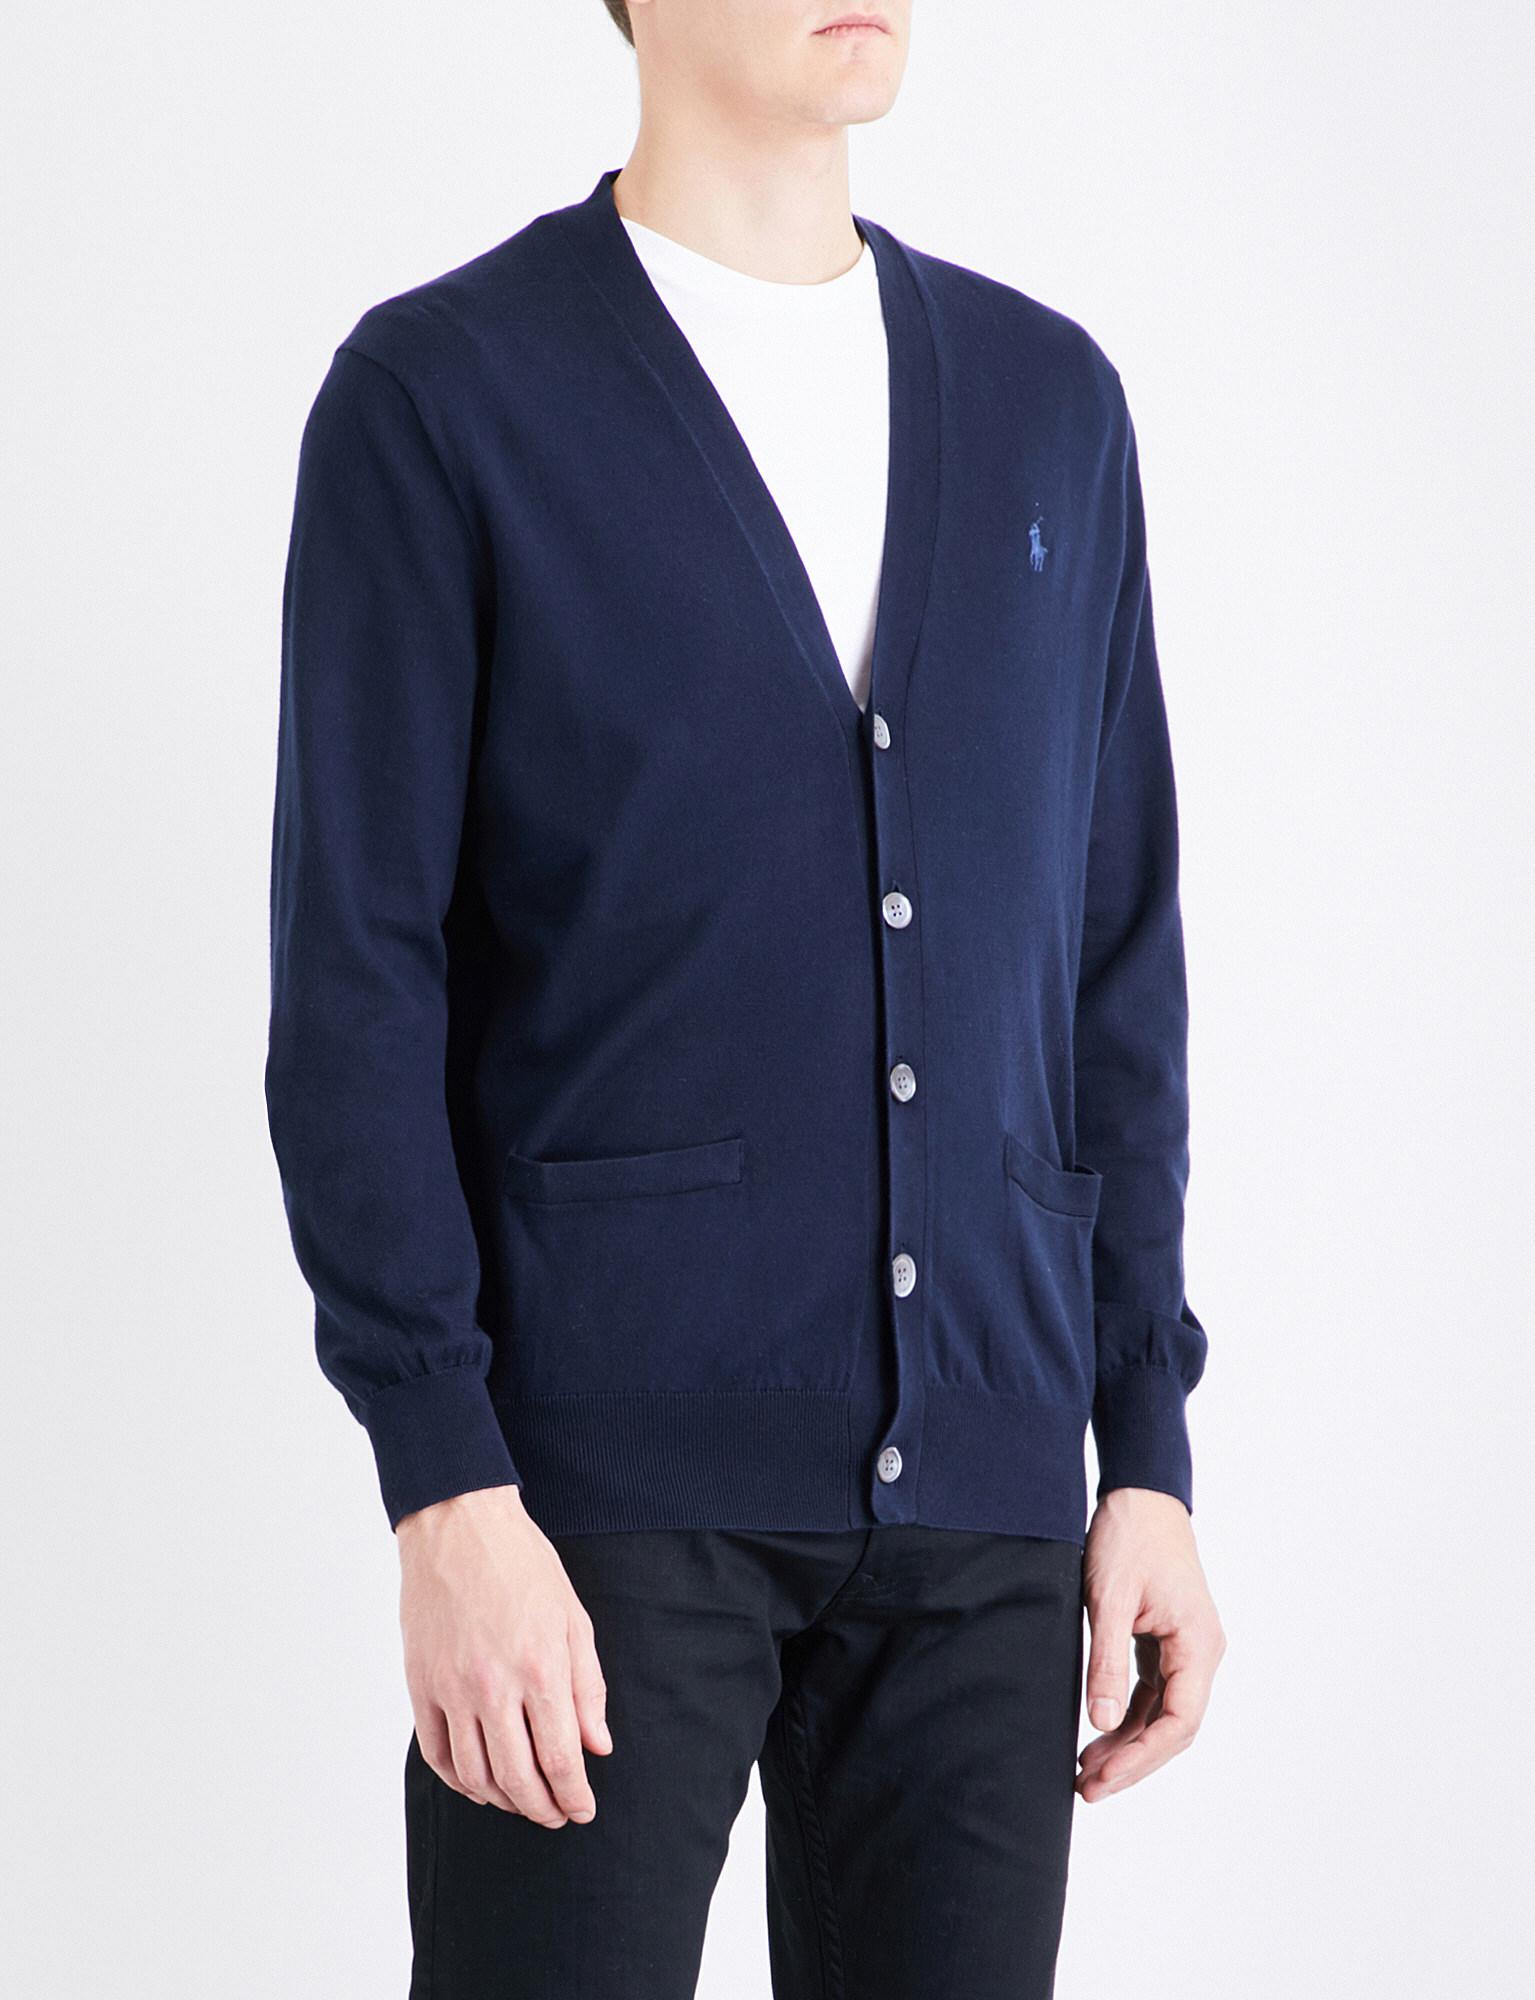 Lyst - Polo Ralph Lauren V-neck Cotton-jersey Cardigan in Blue for Men